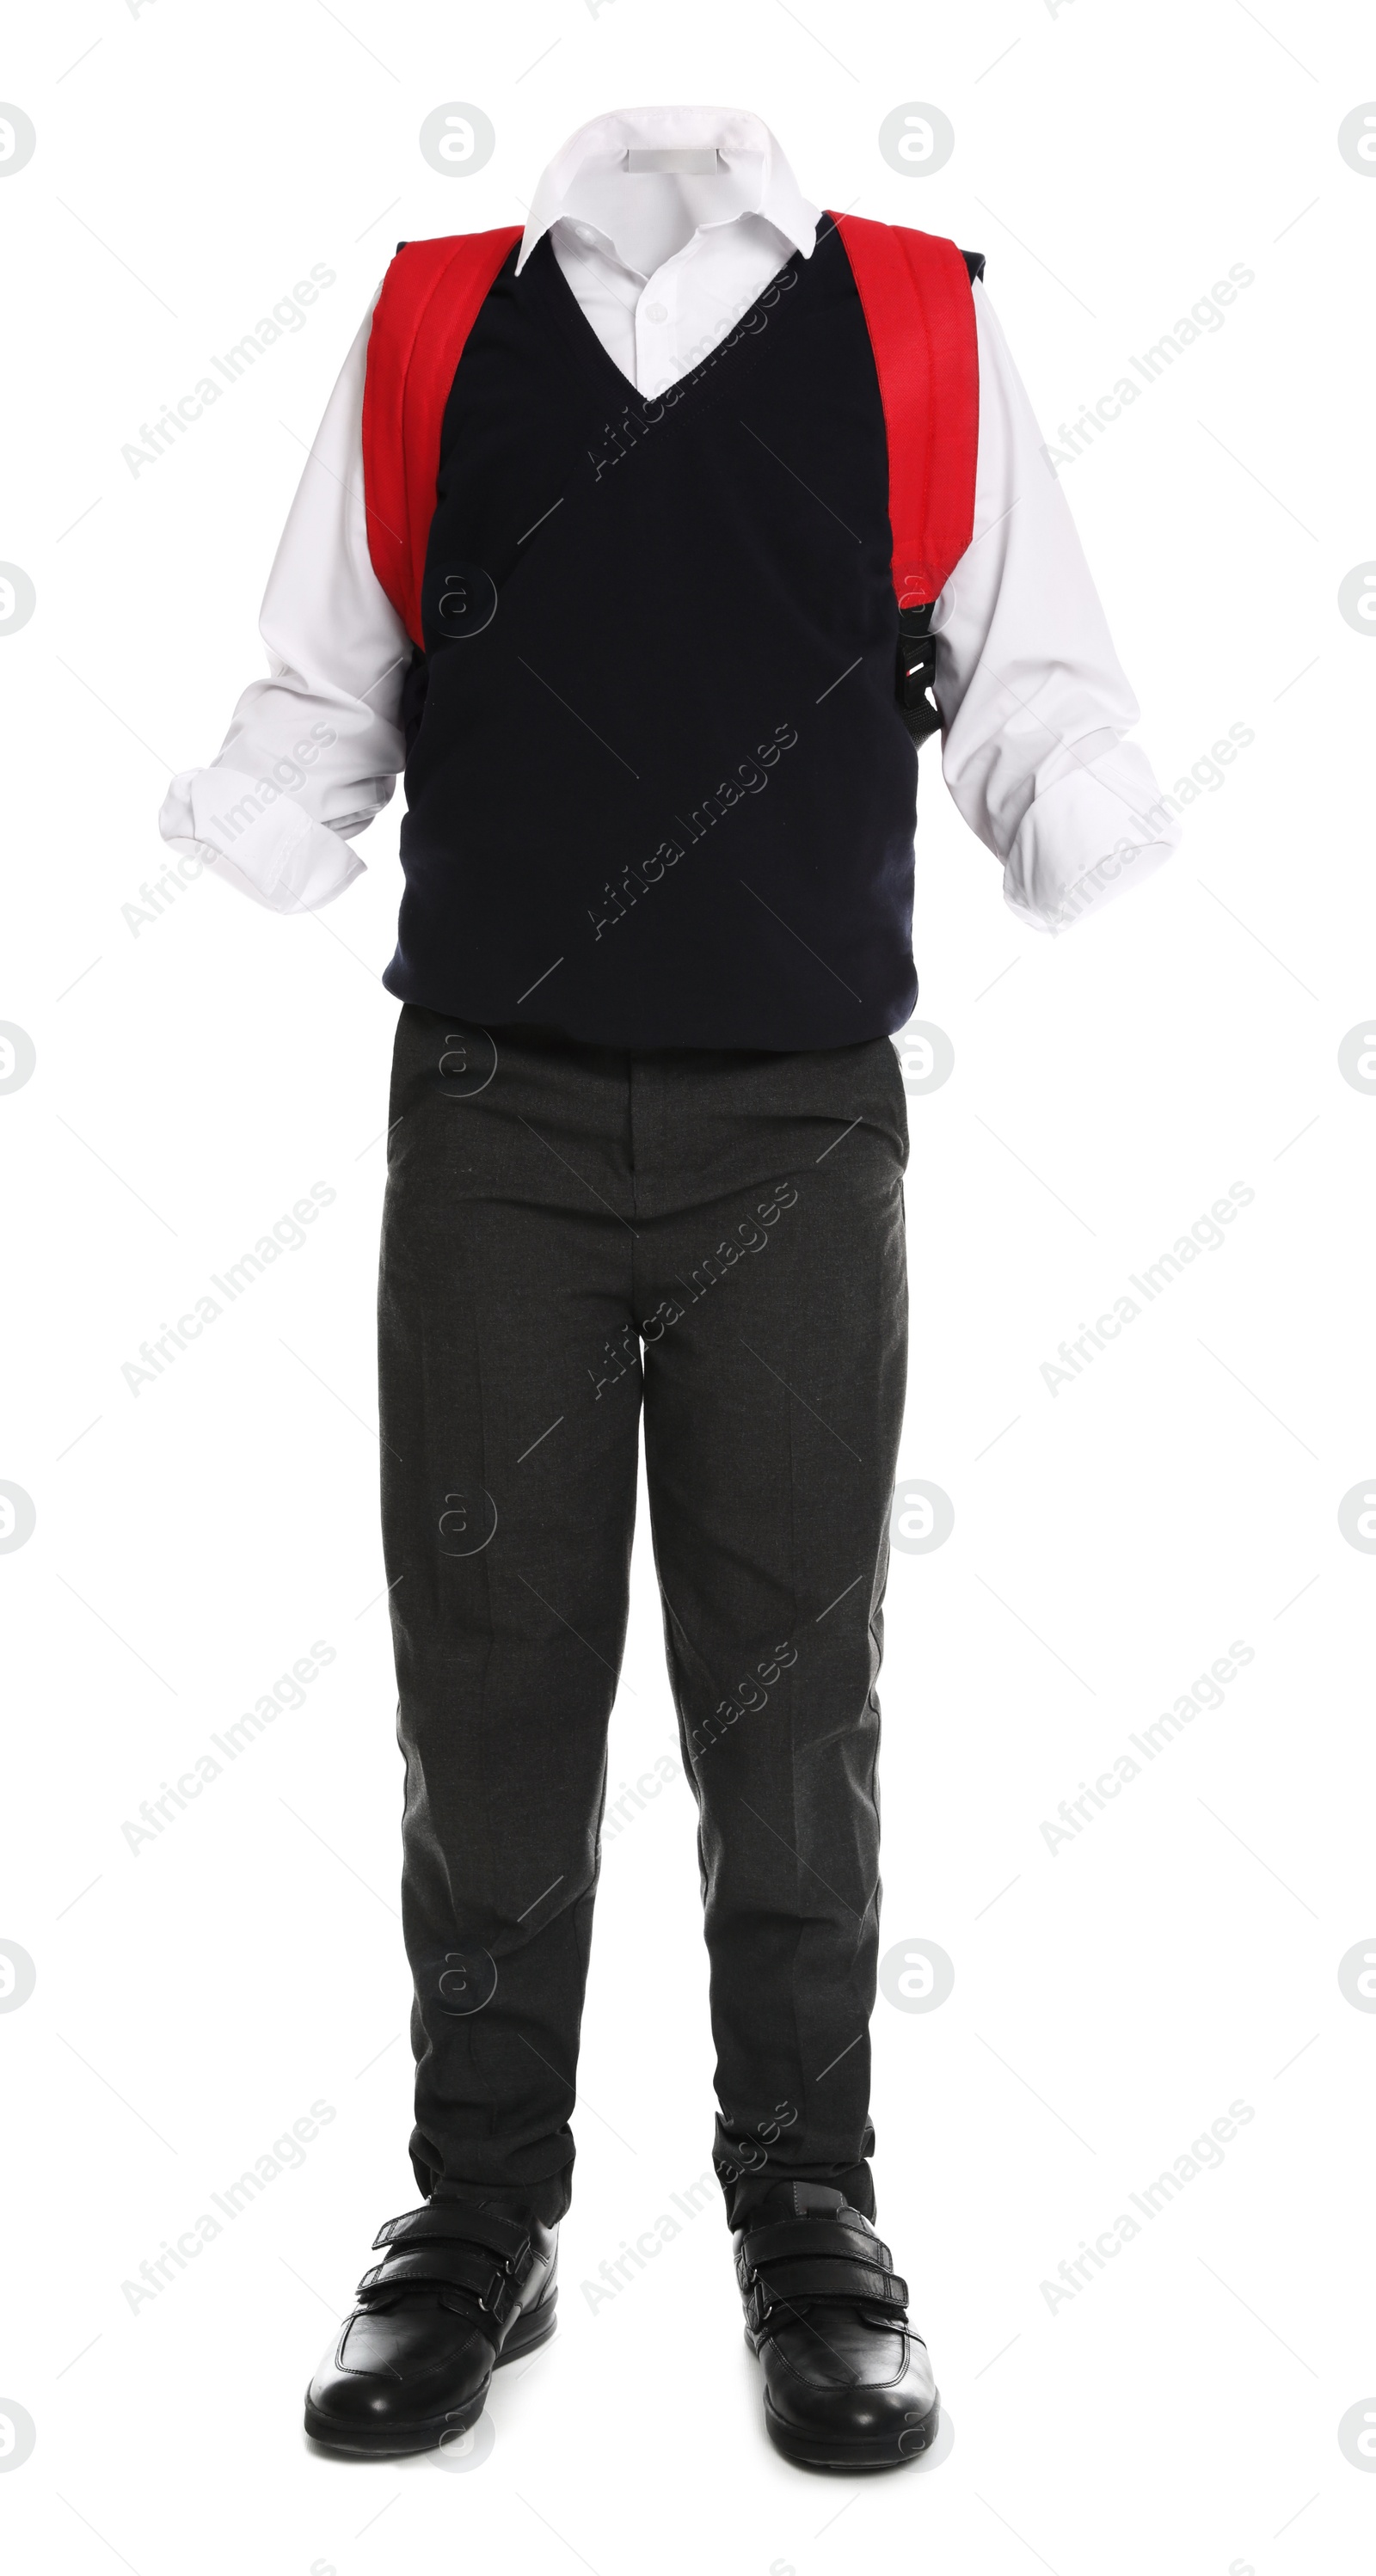 Image of School uniform for boy on white background